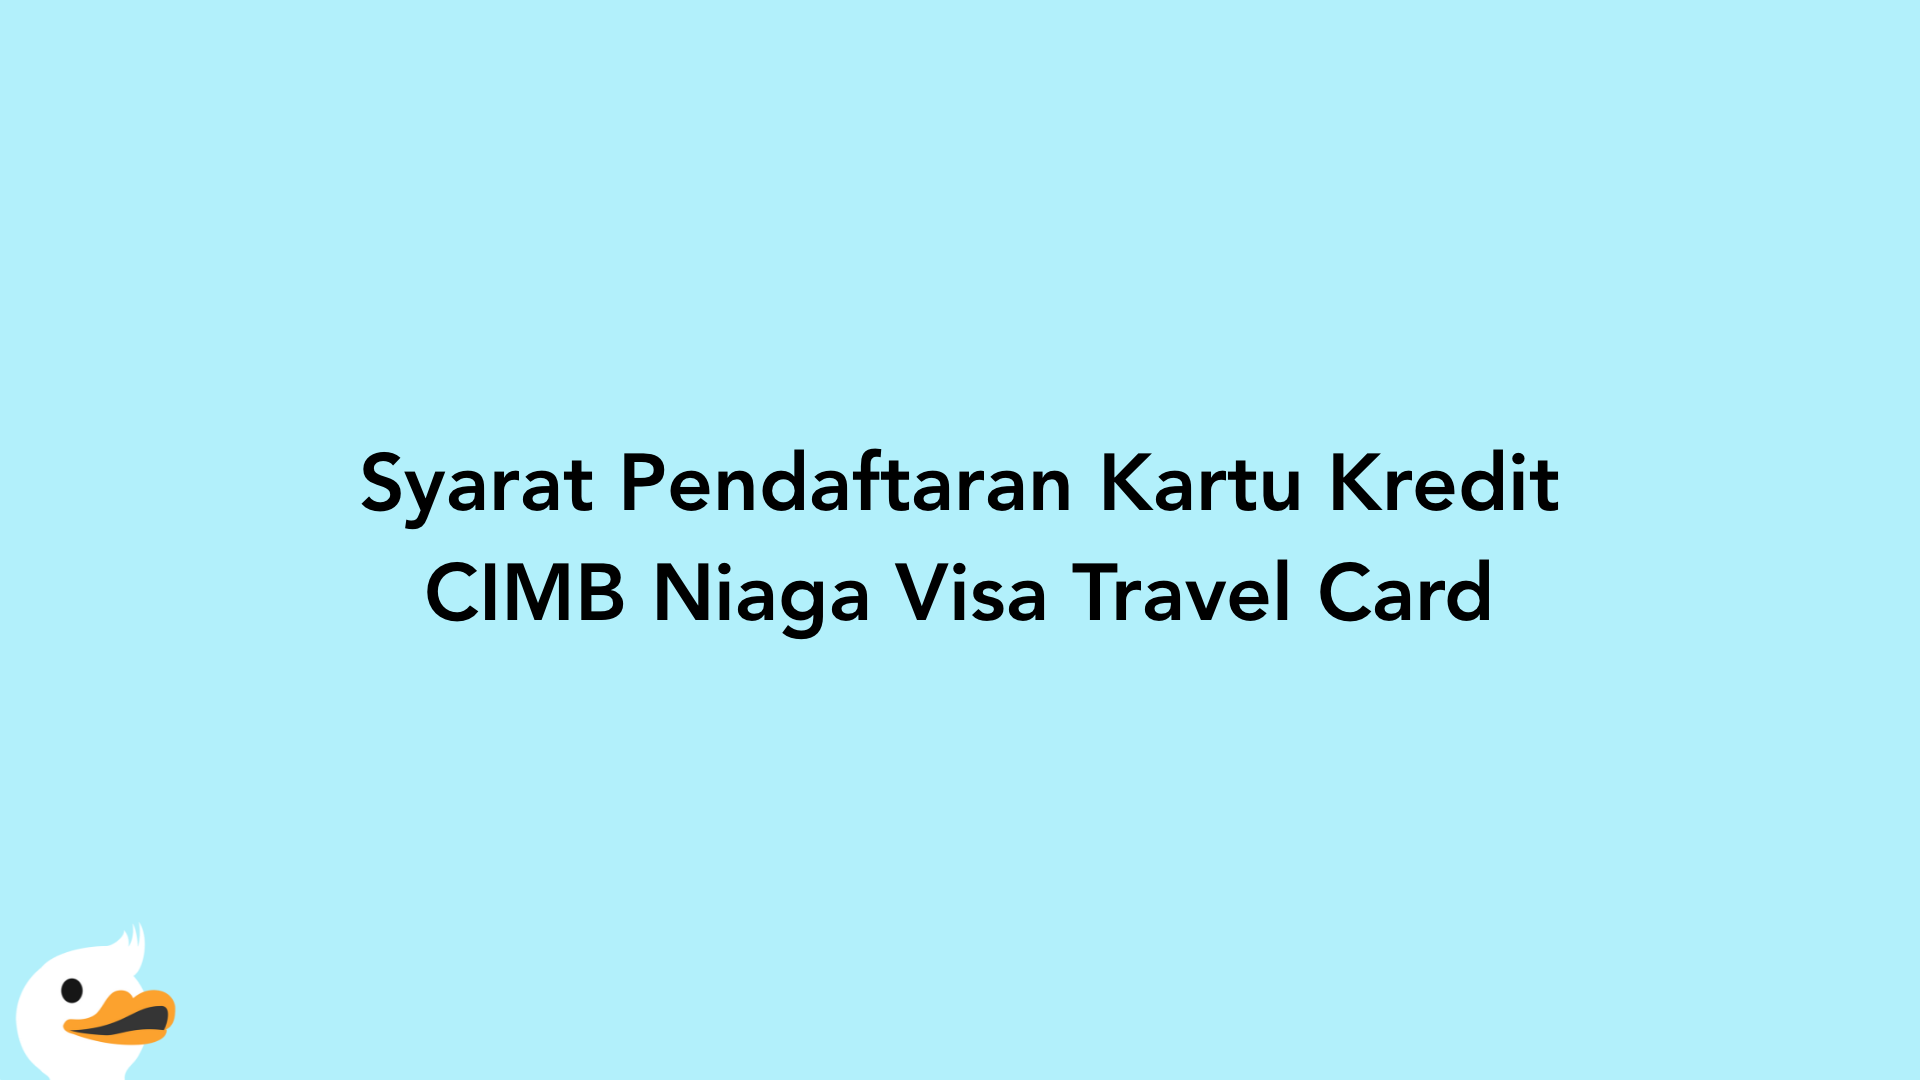 Syarat Pendaftaran Kartu Kredit CIMB Niaga Visa Travel Card